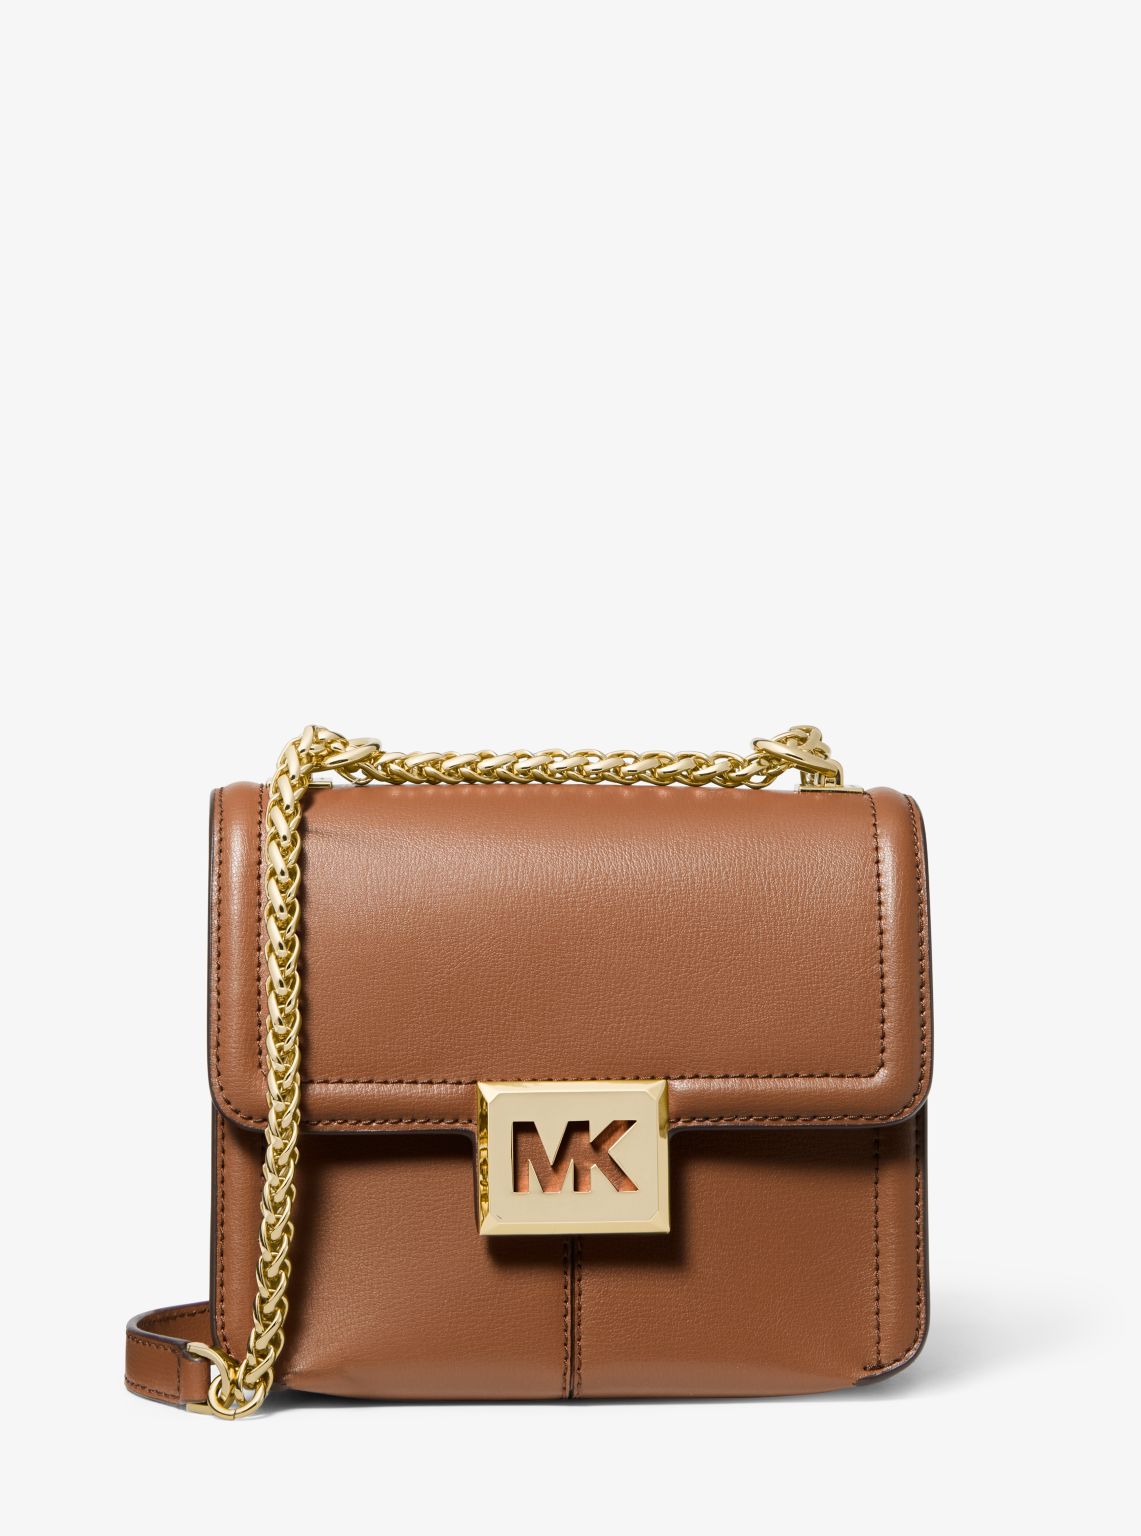 Michael Kors Pre-Loved: Shop Resale Designer Bags & More – Page 3